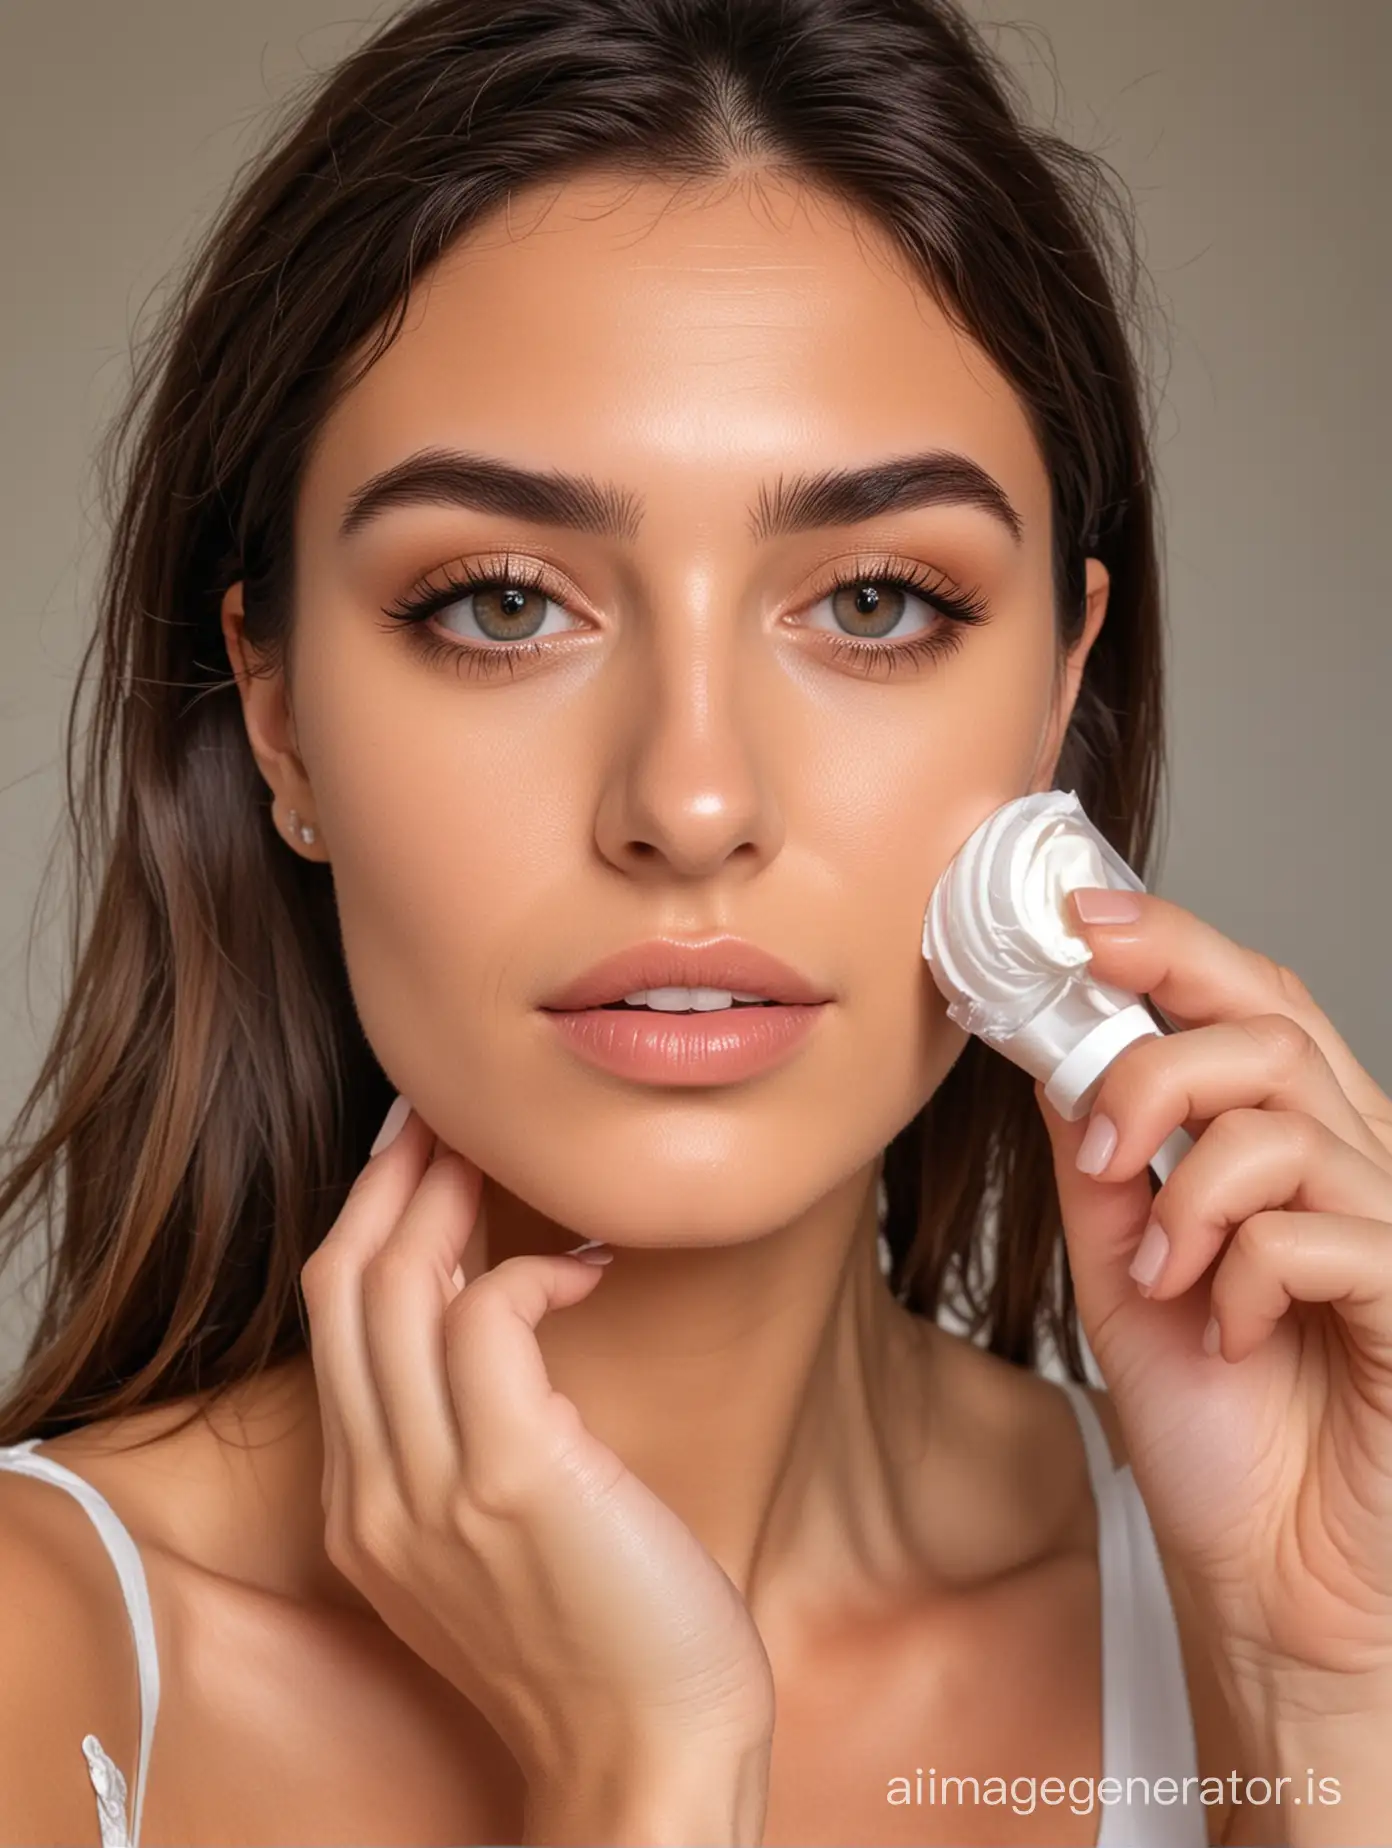 An Italian influencer girl making a post about a new facial cream